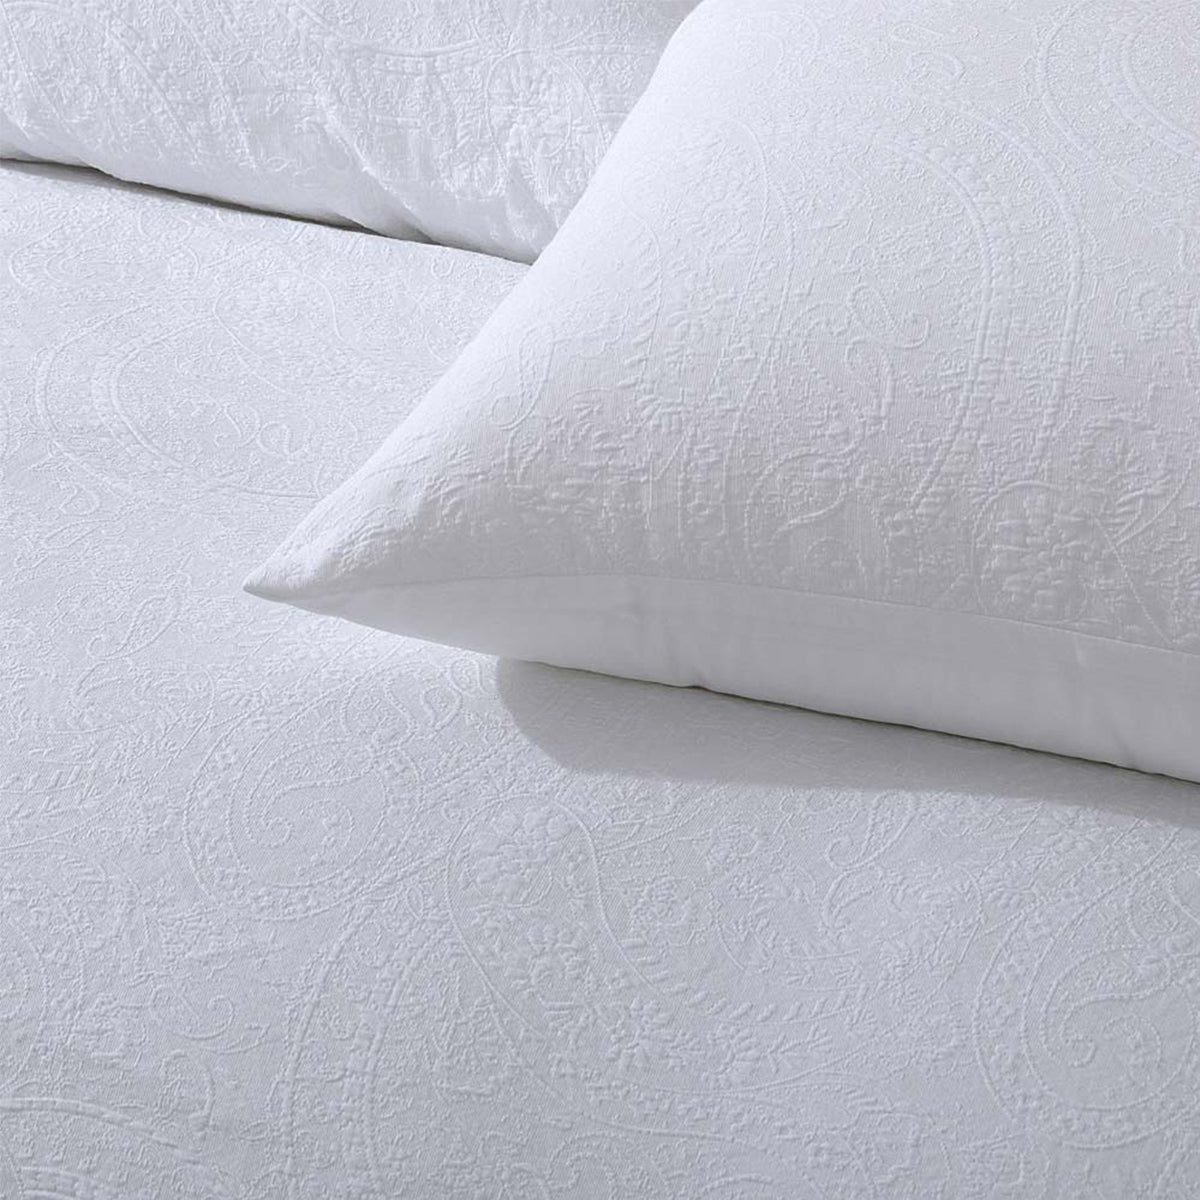 Estelle Jacquard Super King Bedding in an elegant white, enhancing the grandeur of the room.